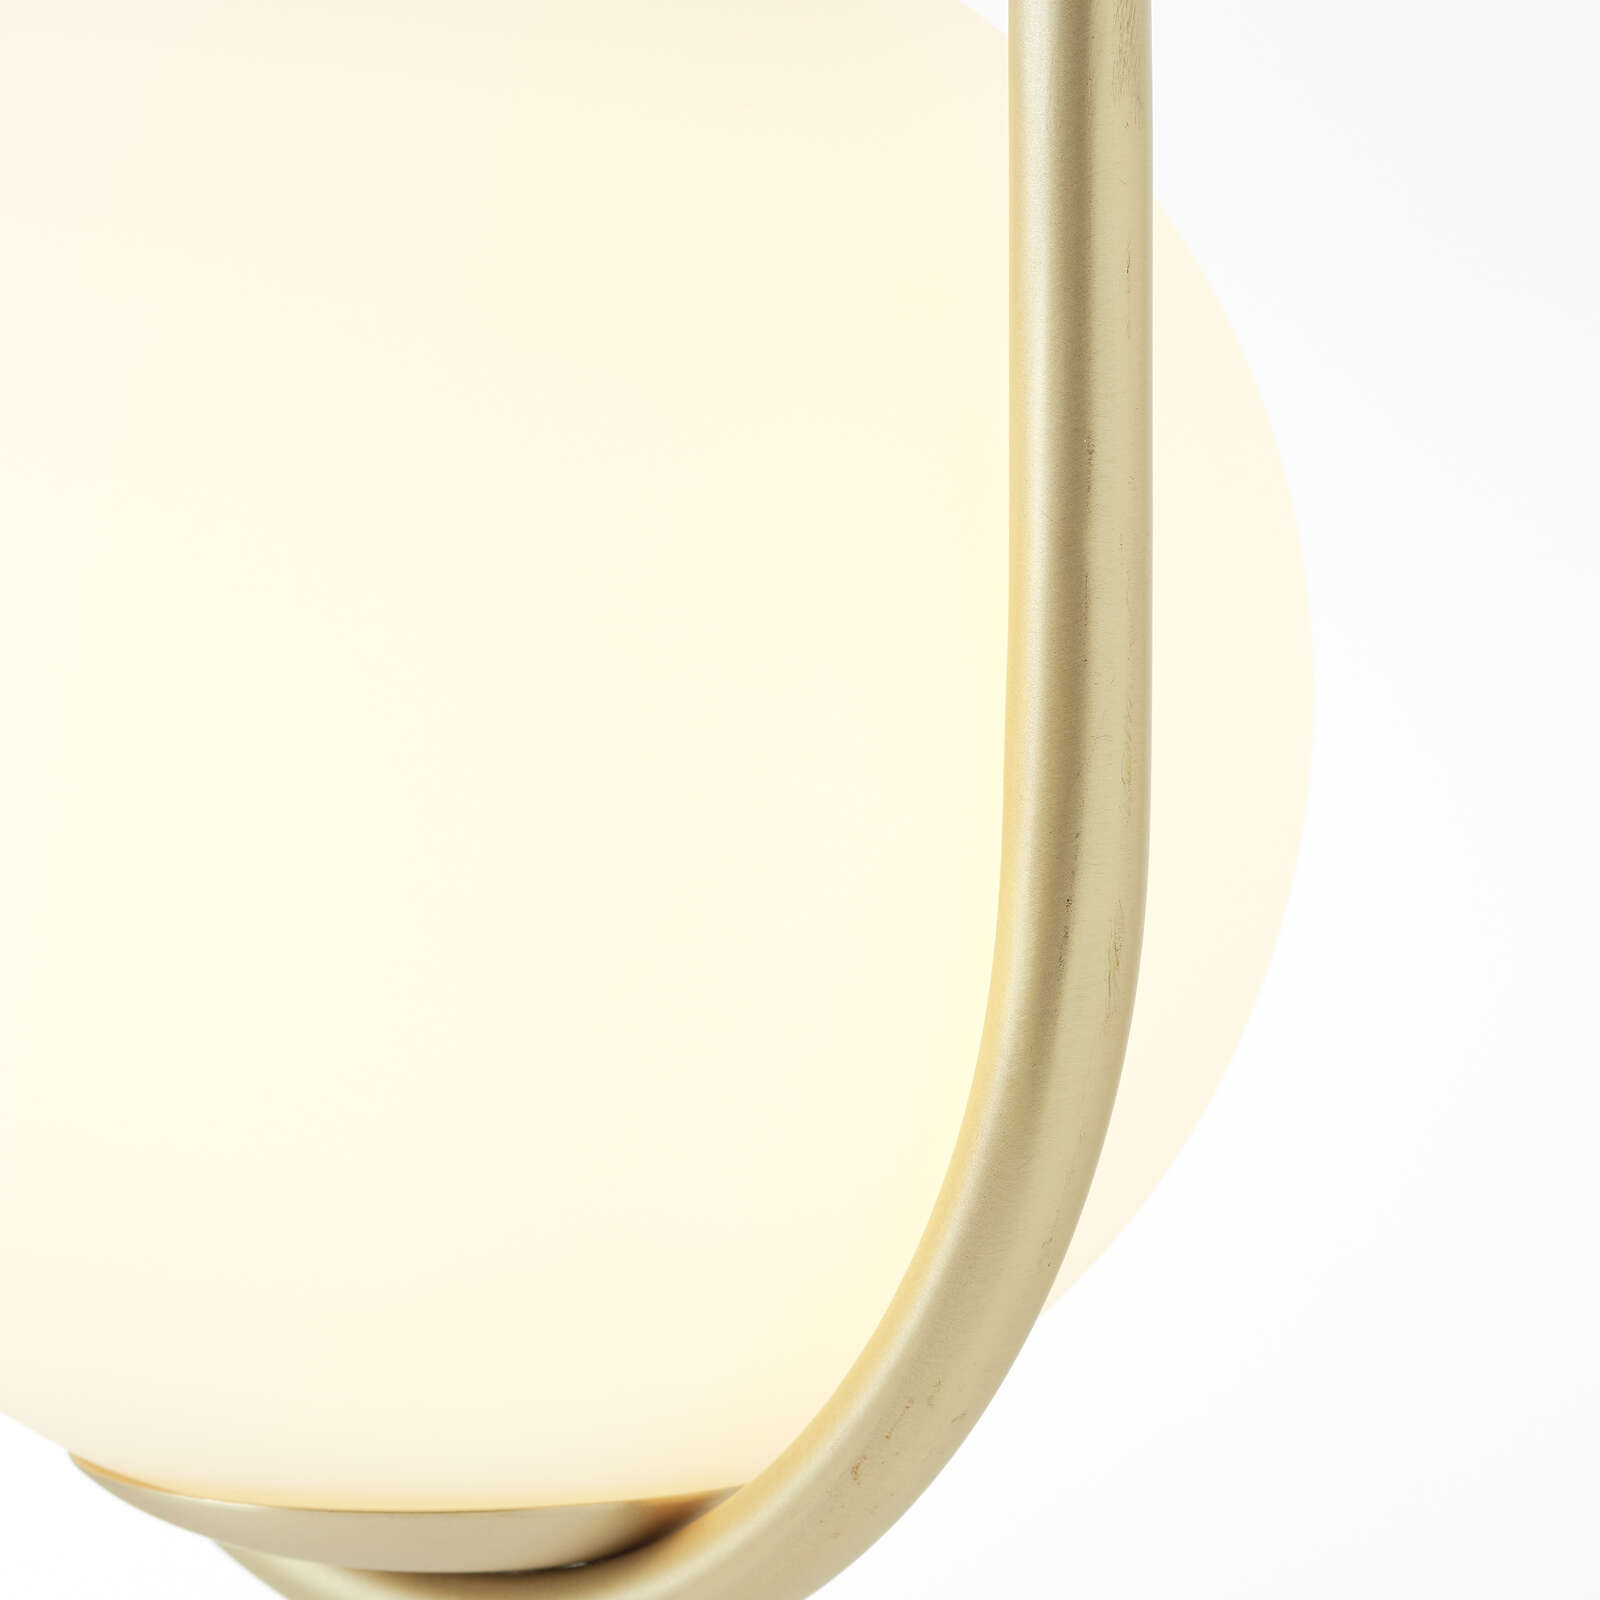             Glass pendant light - Ian - Gold
        